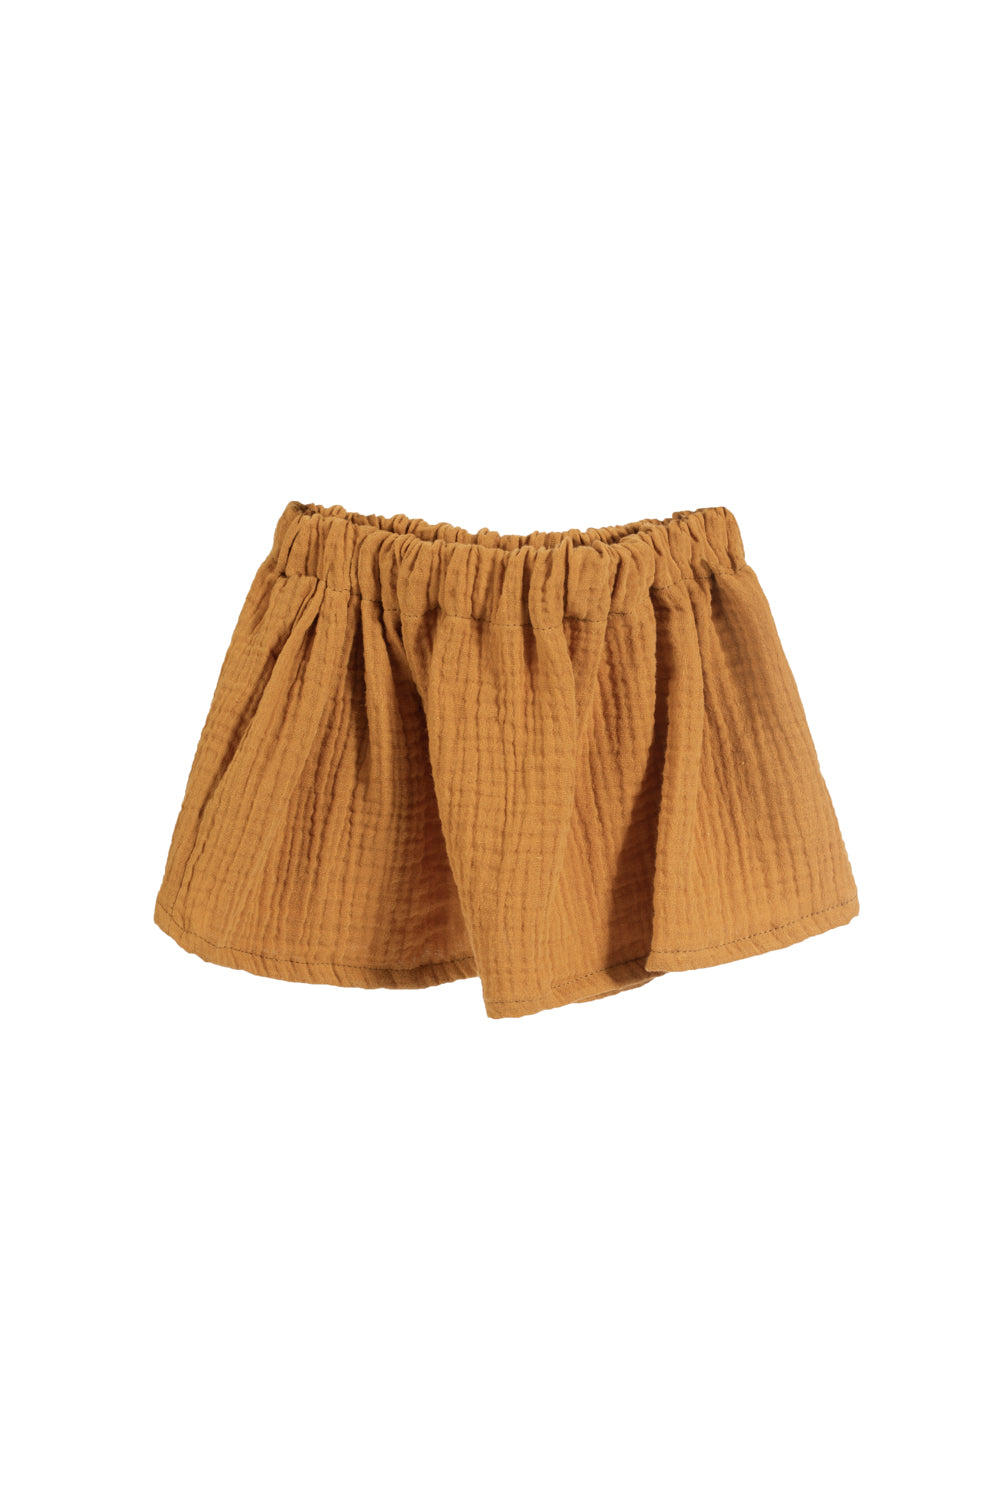 Field | amber skirt